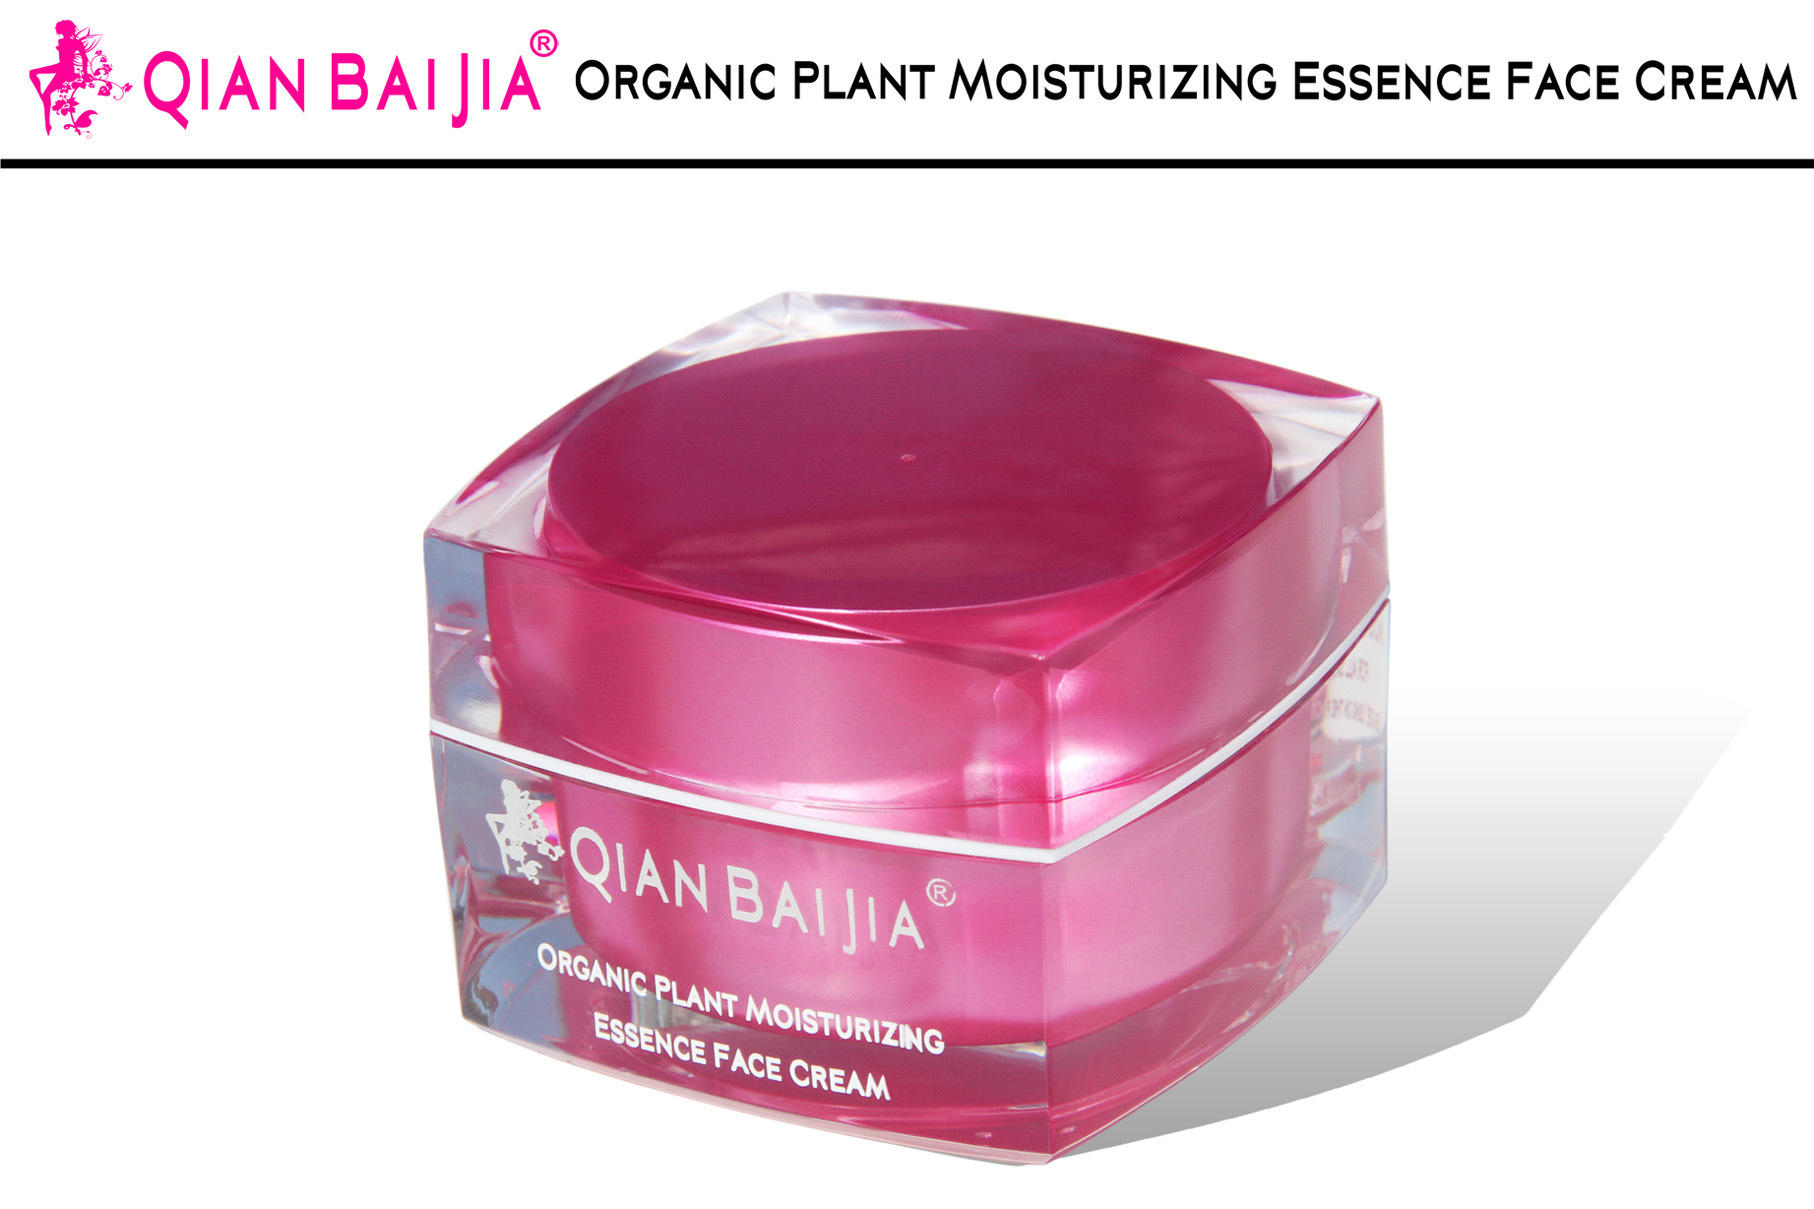 Qianbaijia Organic Plant Moisturizing Essence Face Cream Cosmetic (50g)